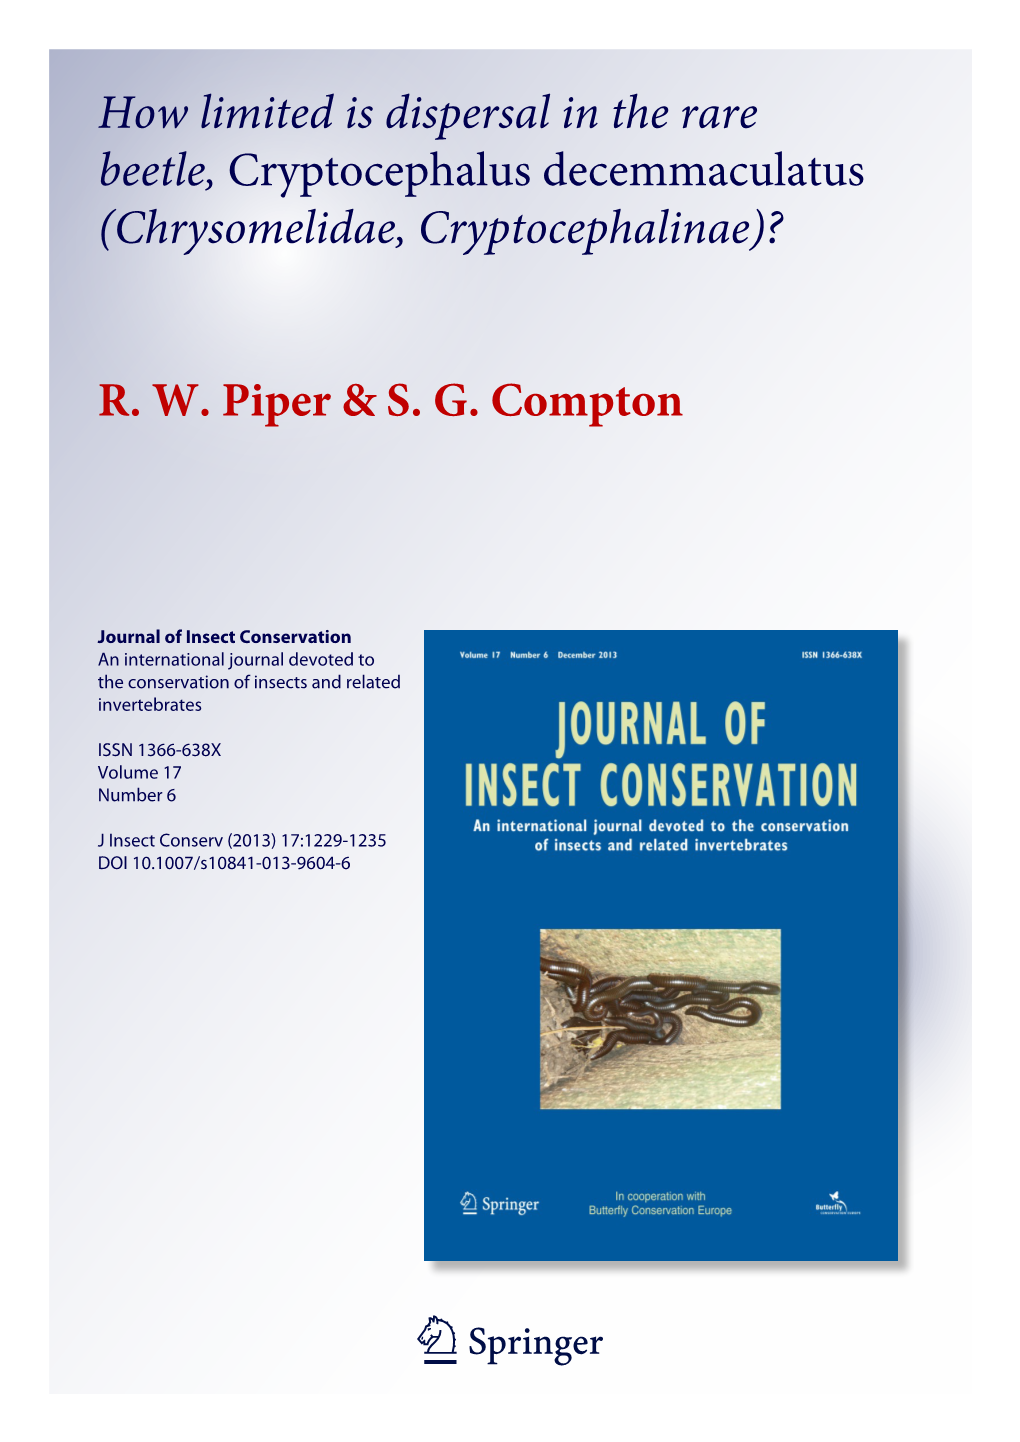 How Limited Is Dispersal in the Rare Beetle, Cryptocephalus Decemmaculatus (Chrysomelidae, Cryptocephalinae)?